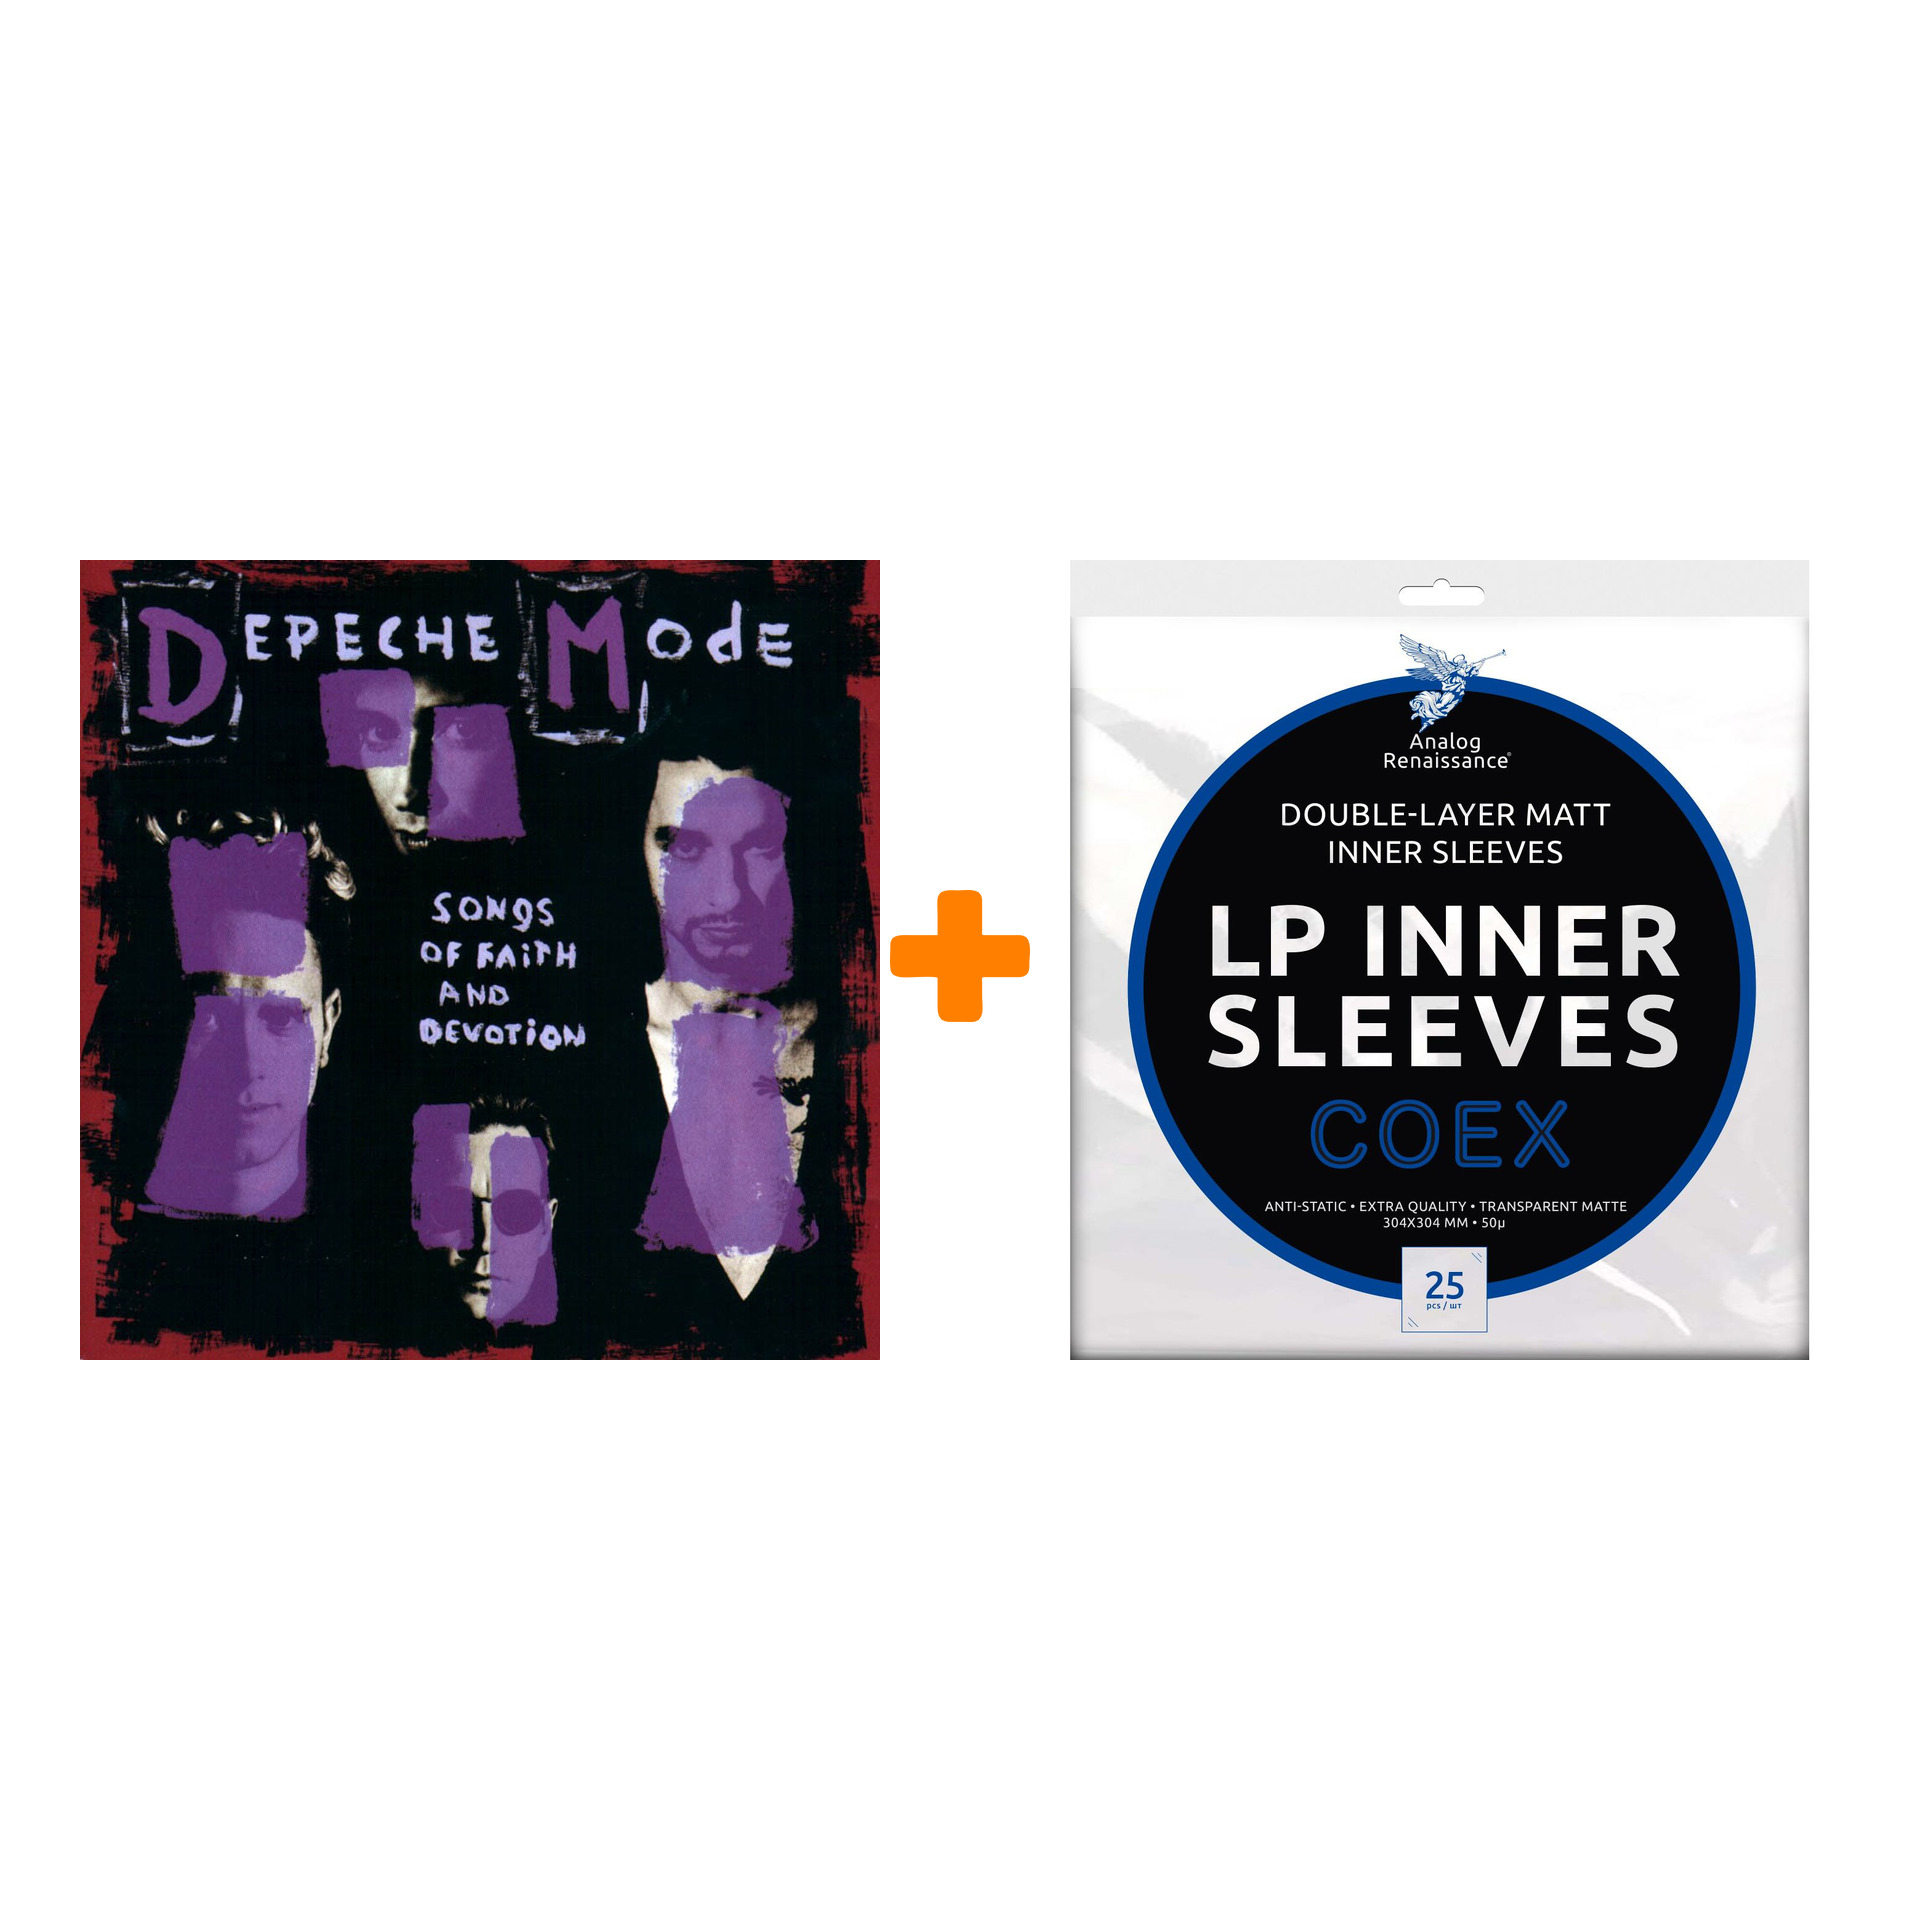 DEPECHE MODE Songs Of Faith And Devotion LP + Конверты внутренние COEX для грампластинок 12 25шт Набор